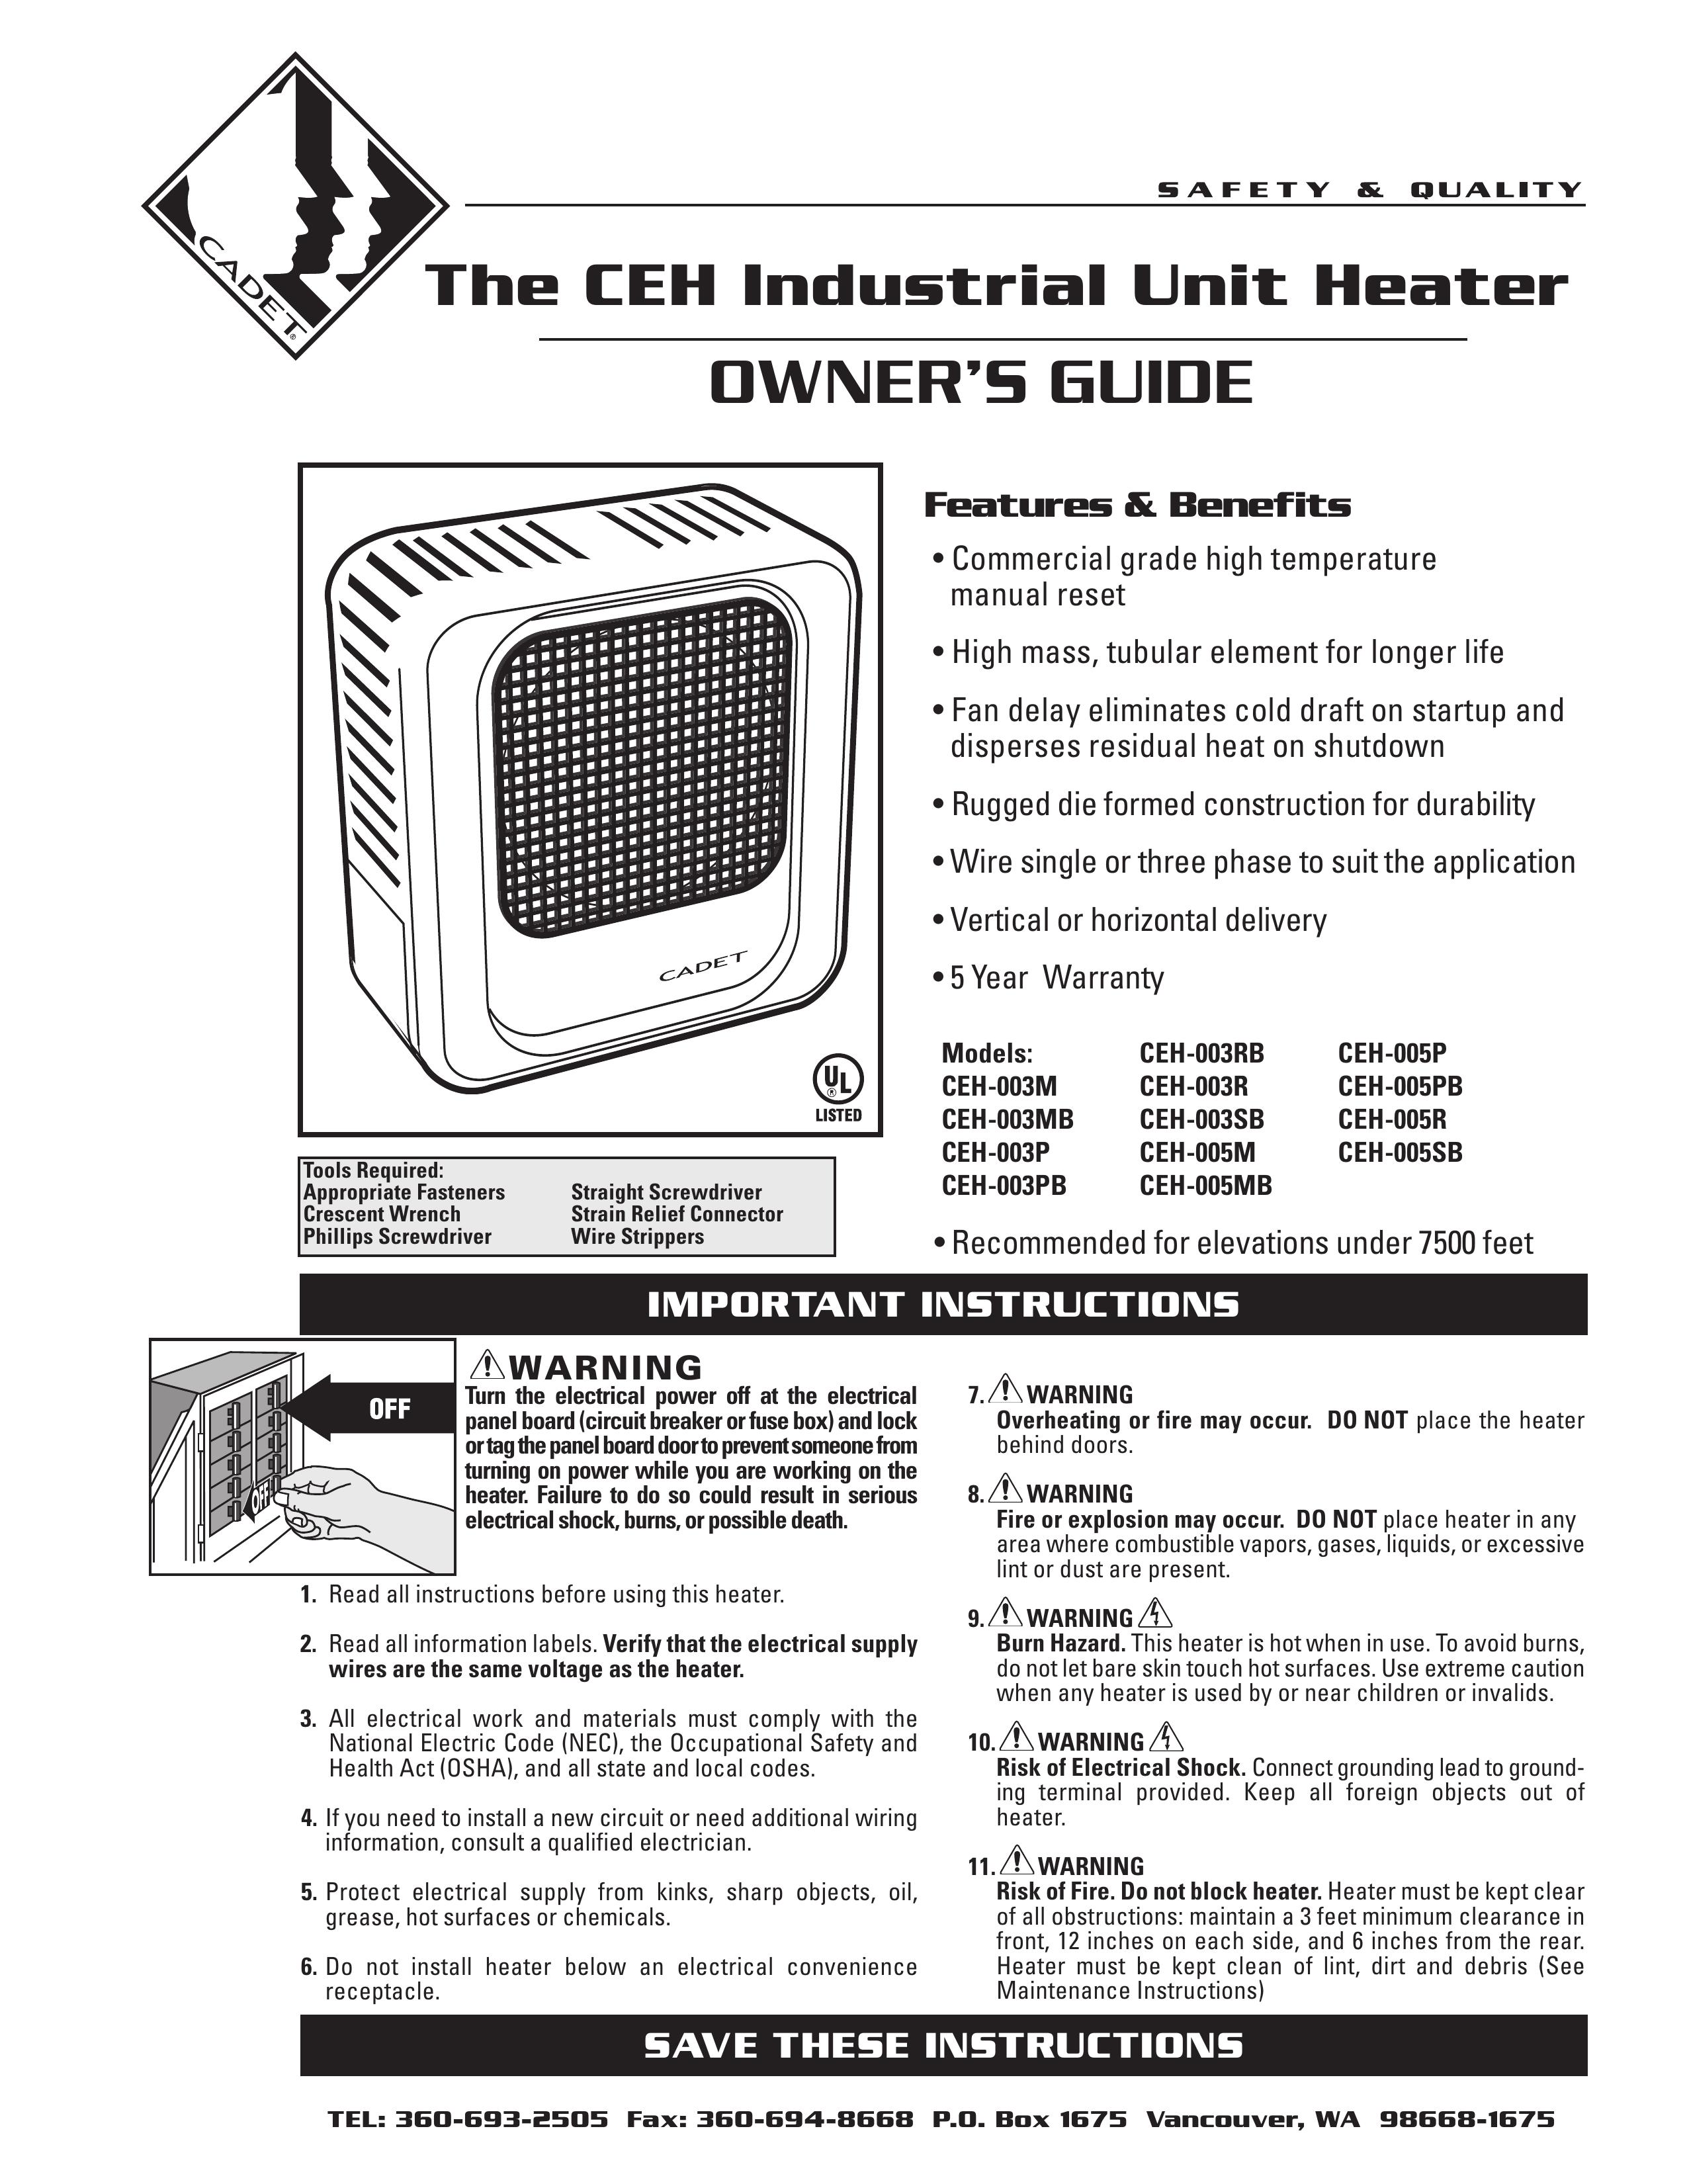 Cadet CEH-005MB Patio Heater User Manual